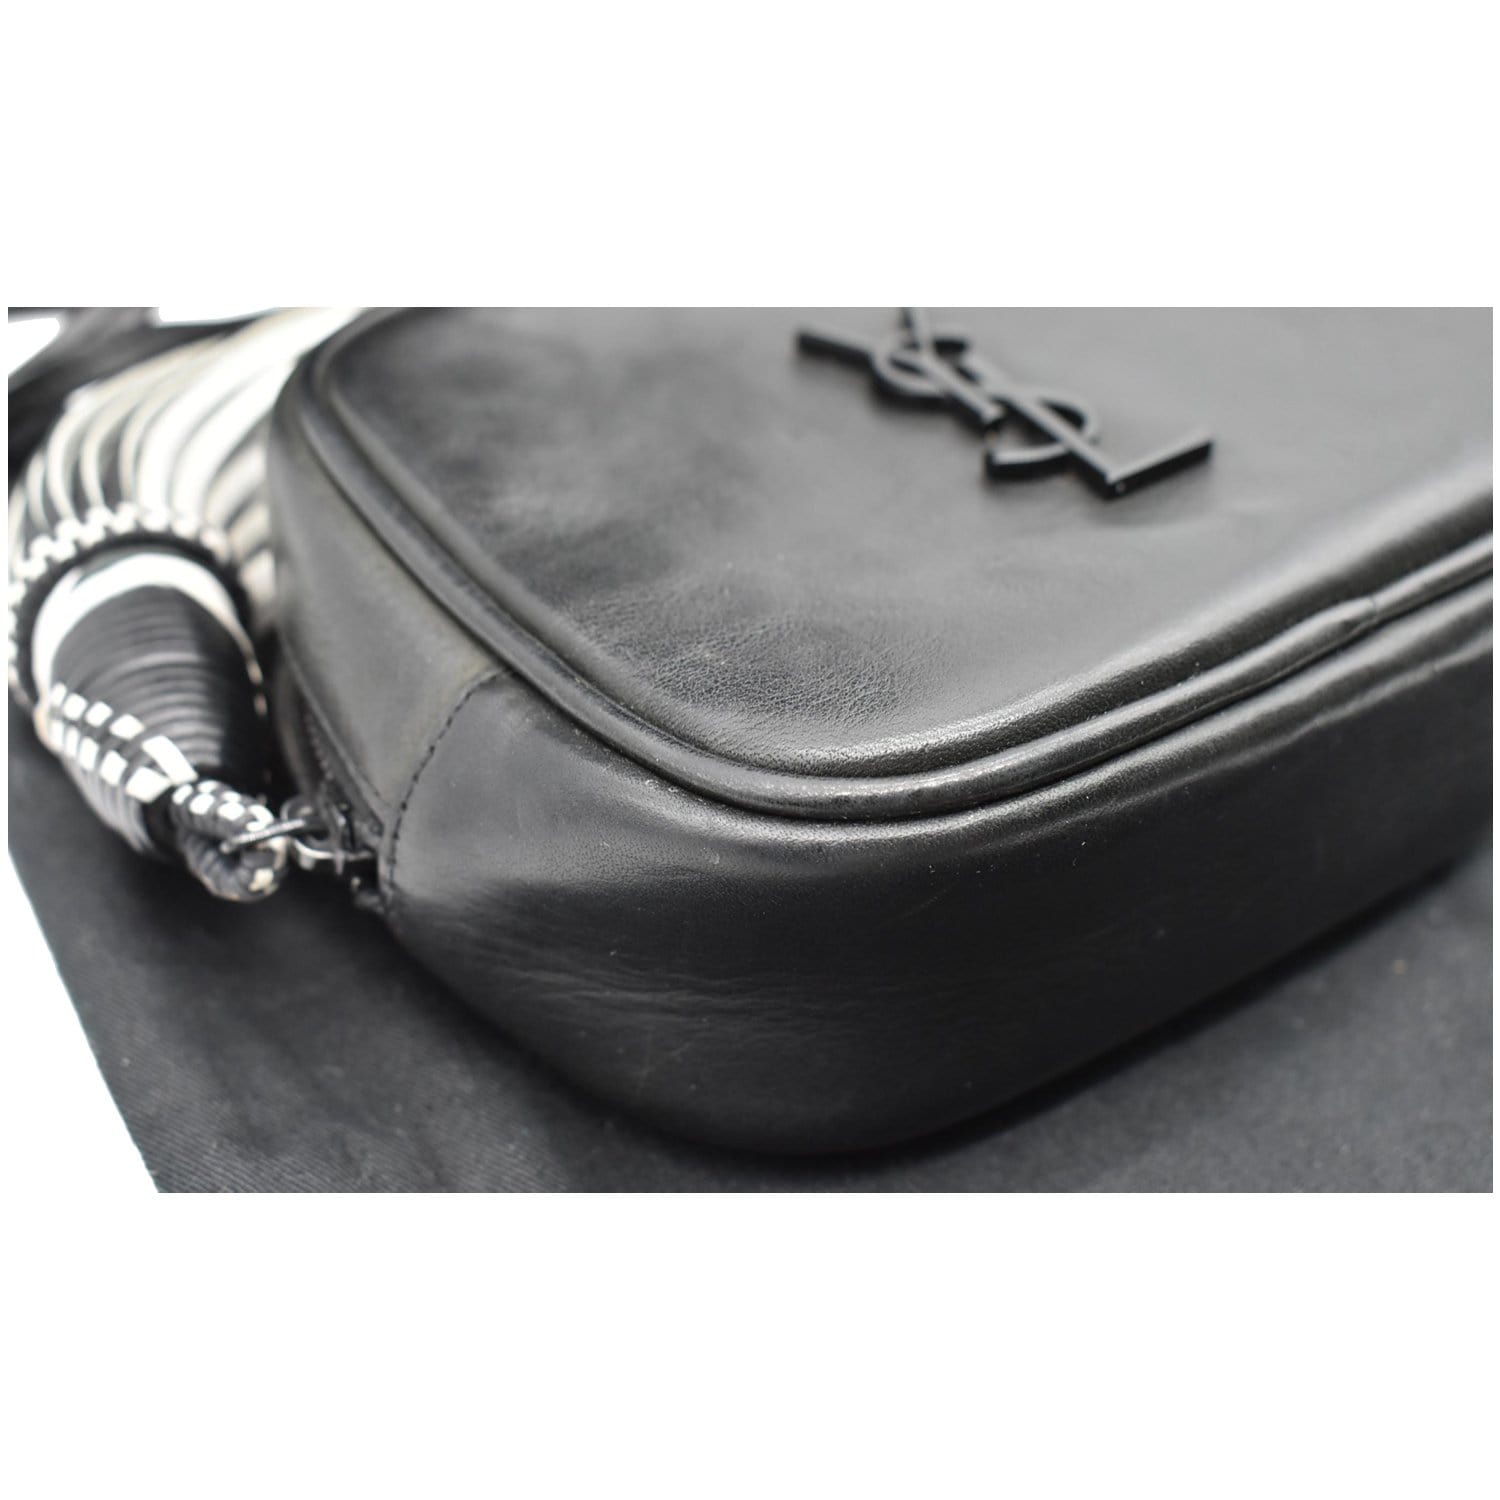 Yves Saint Laurent, Bags, Ysl Monogram Blogger Leather Crossbody Bag